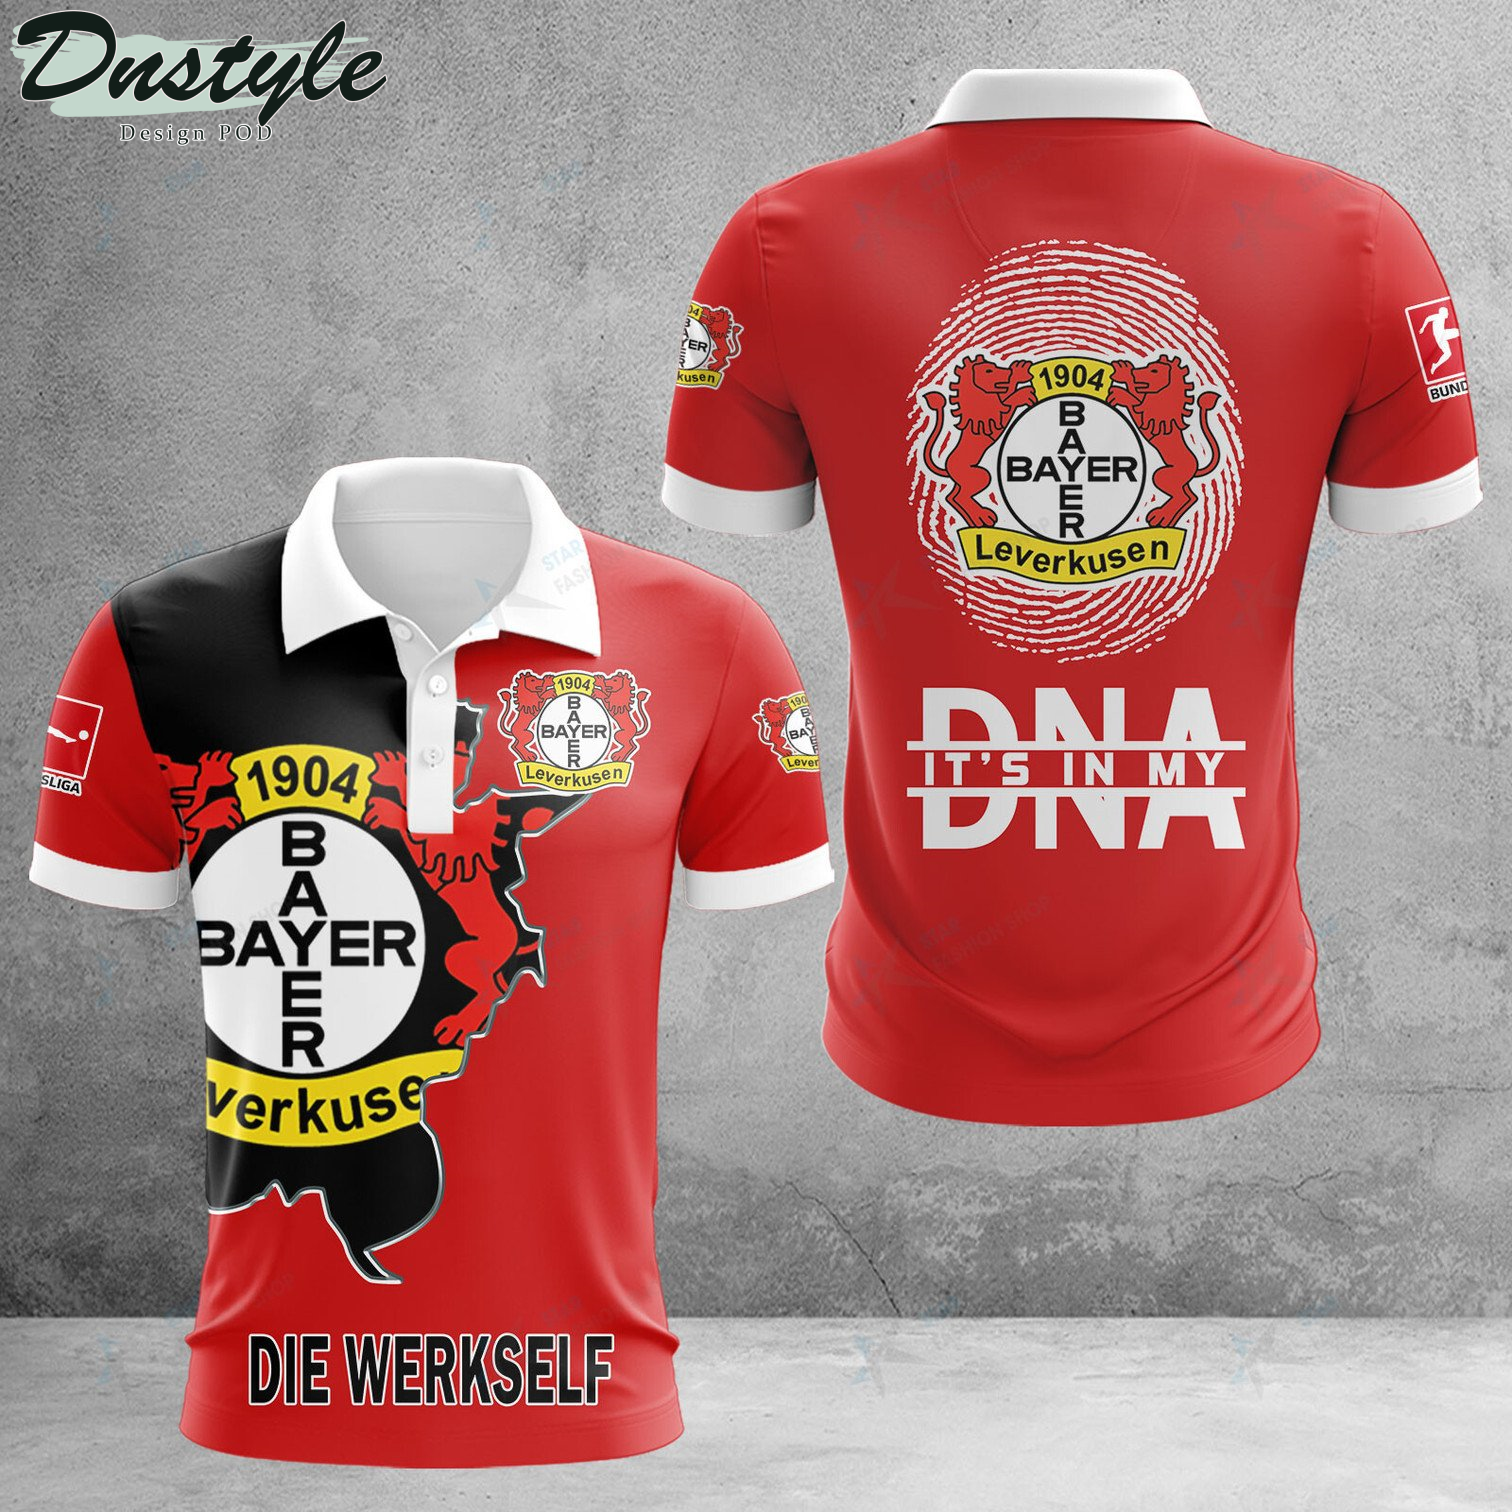 Bayer 04 Leverkusen it's in my DNA polo shirt